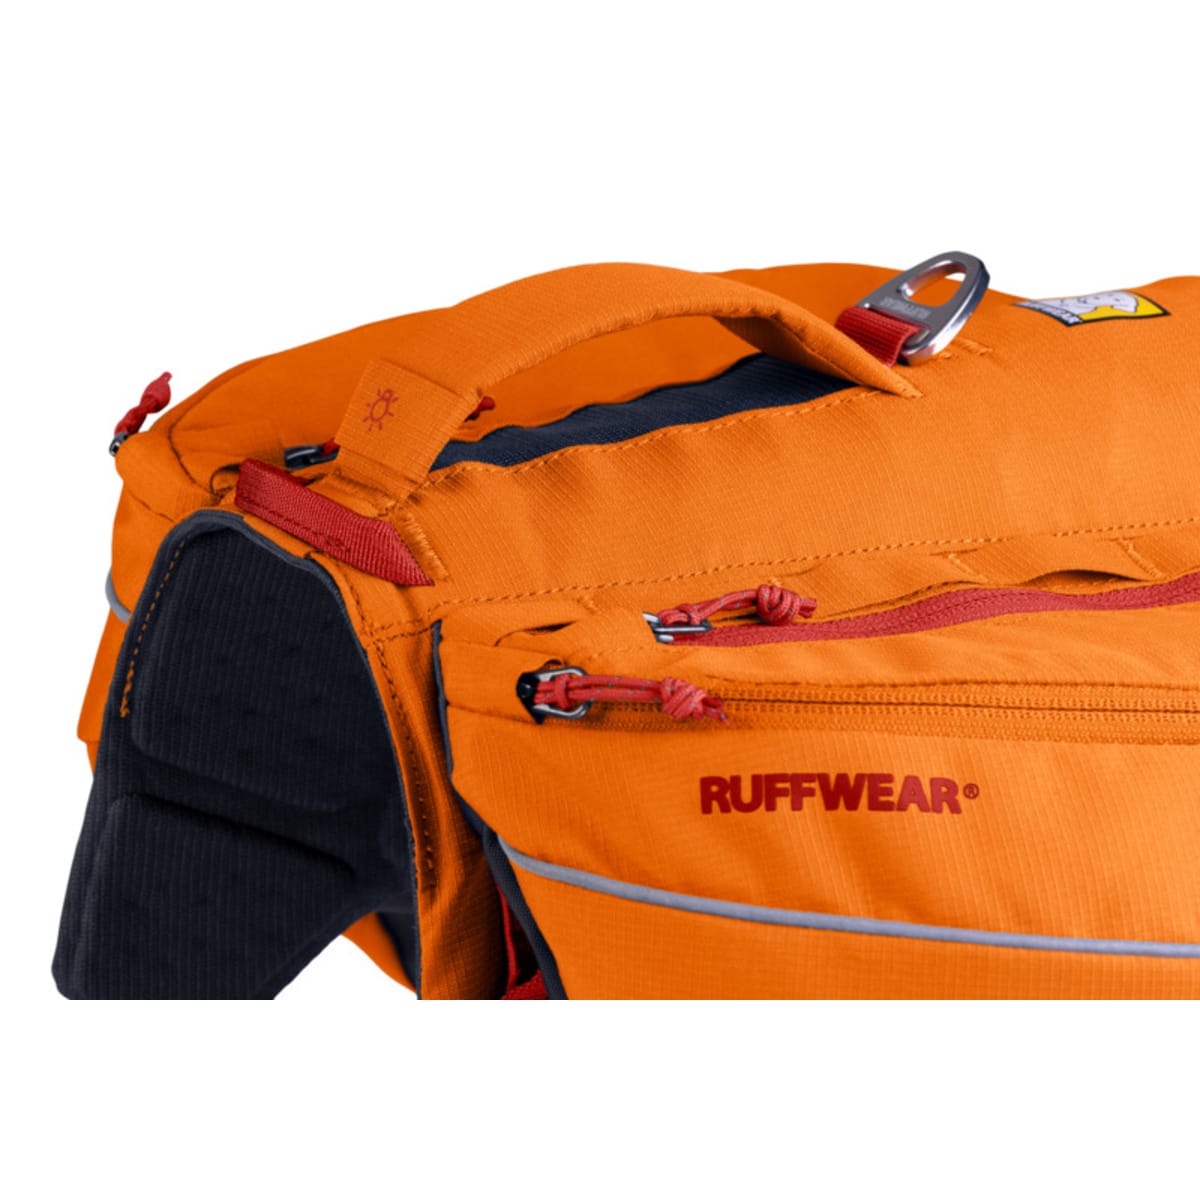 Ruffwear Approach oranssi koiran reppu | Karkkainen.com verkkokauppa